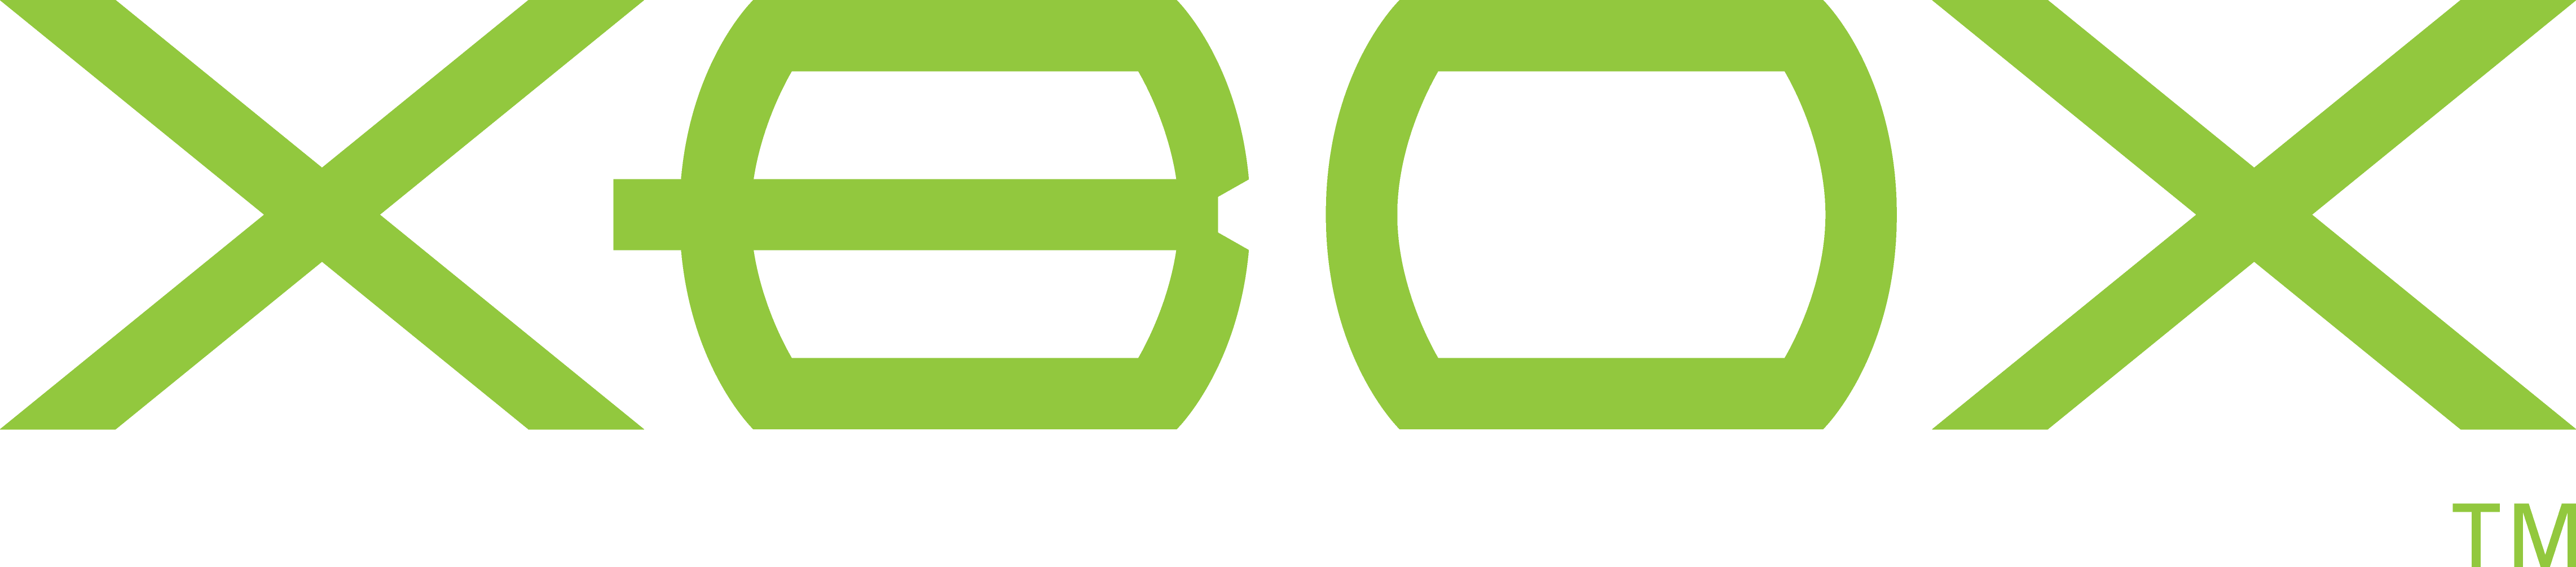 Xbox Logo - Pluspng